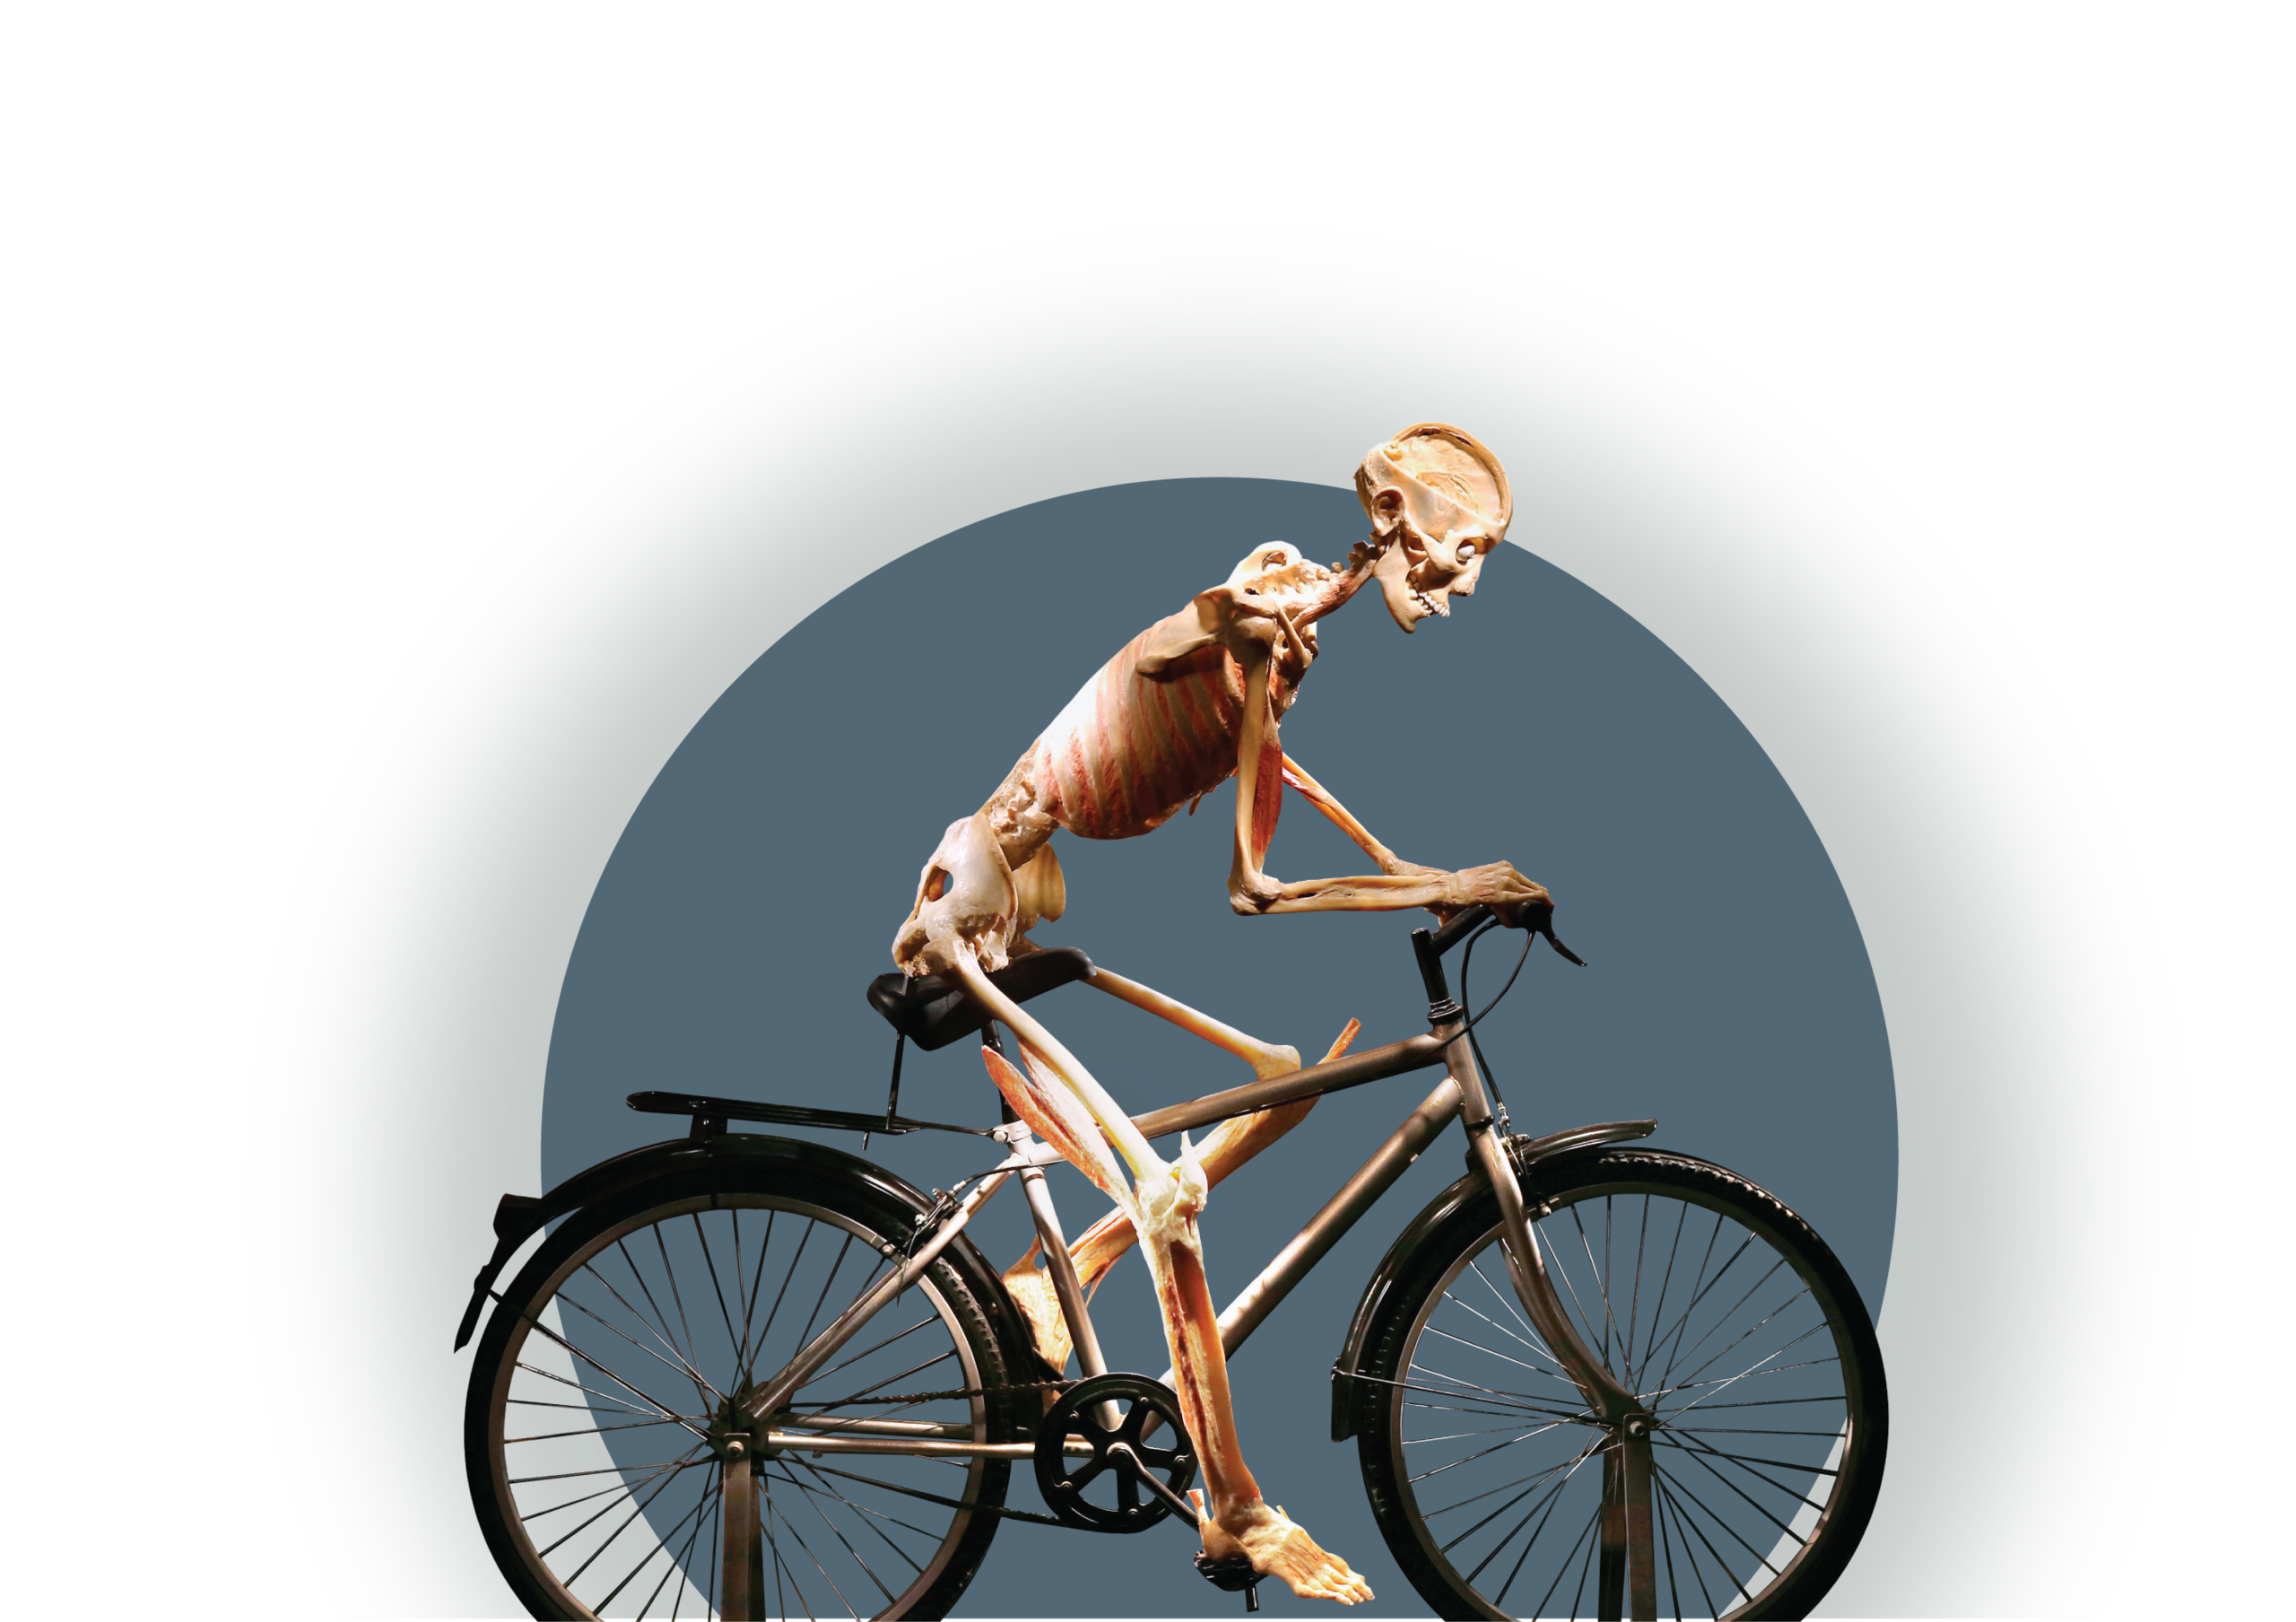 Bodies-Human-on-Bicycle